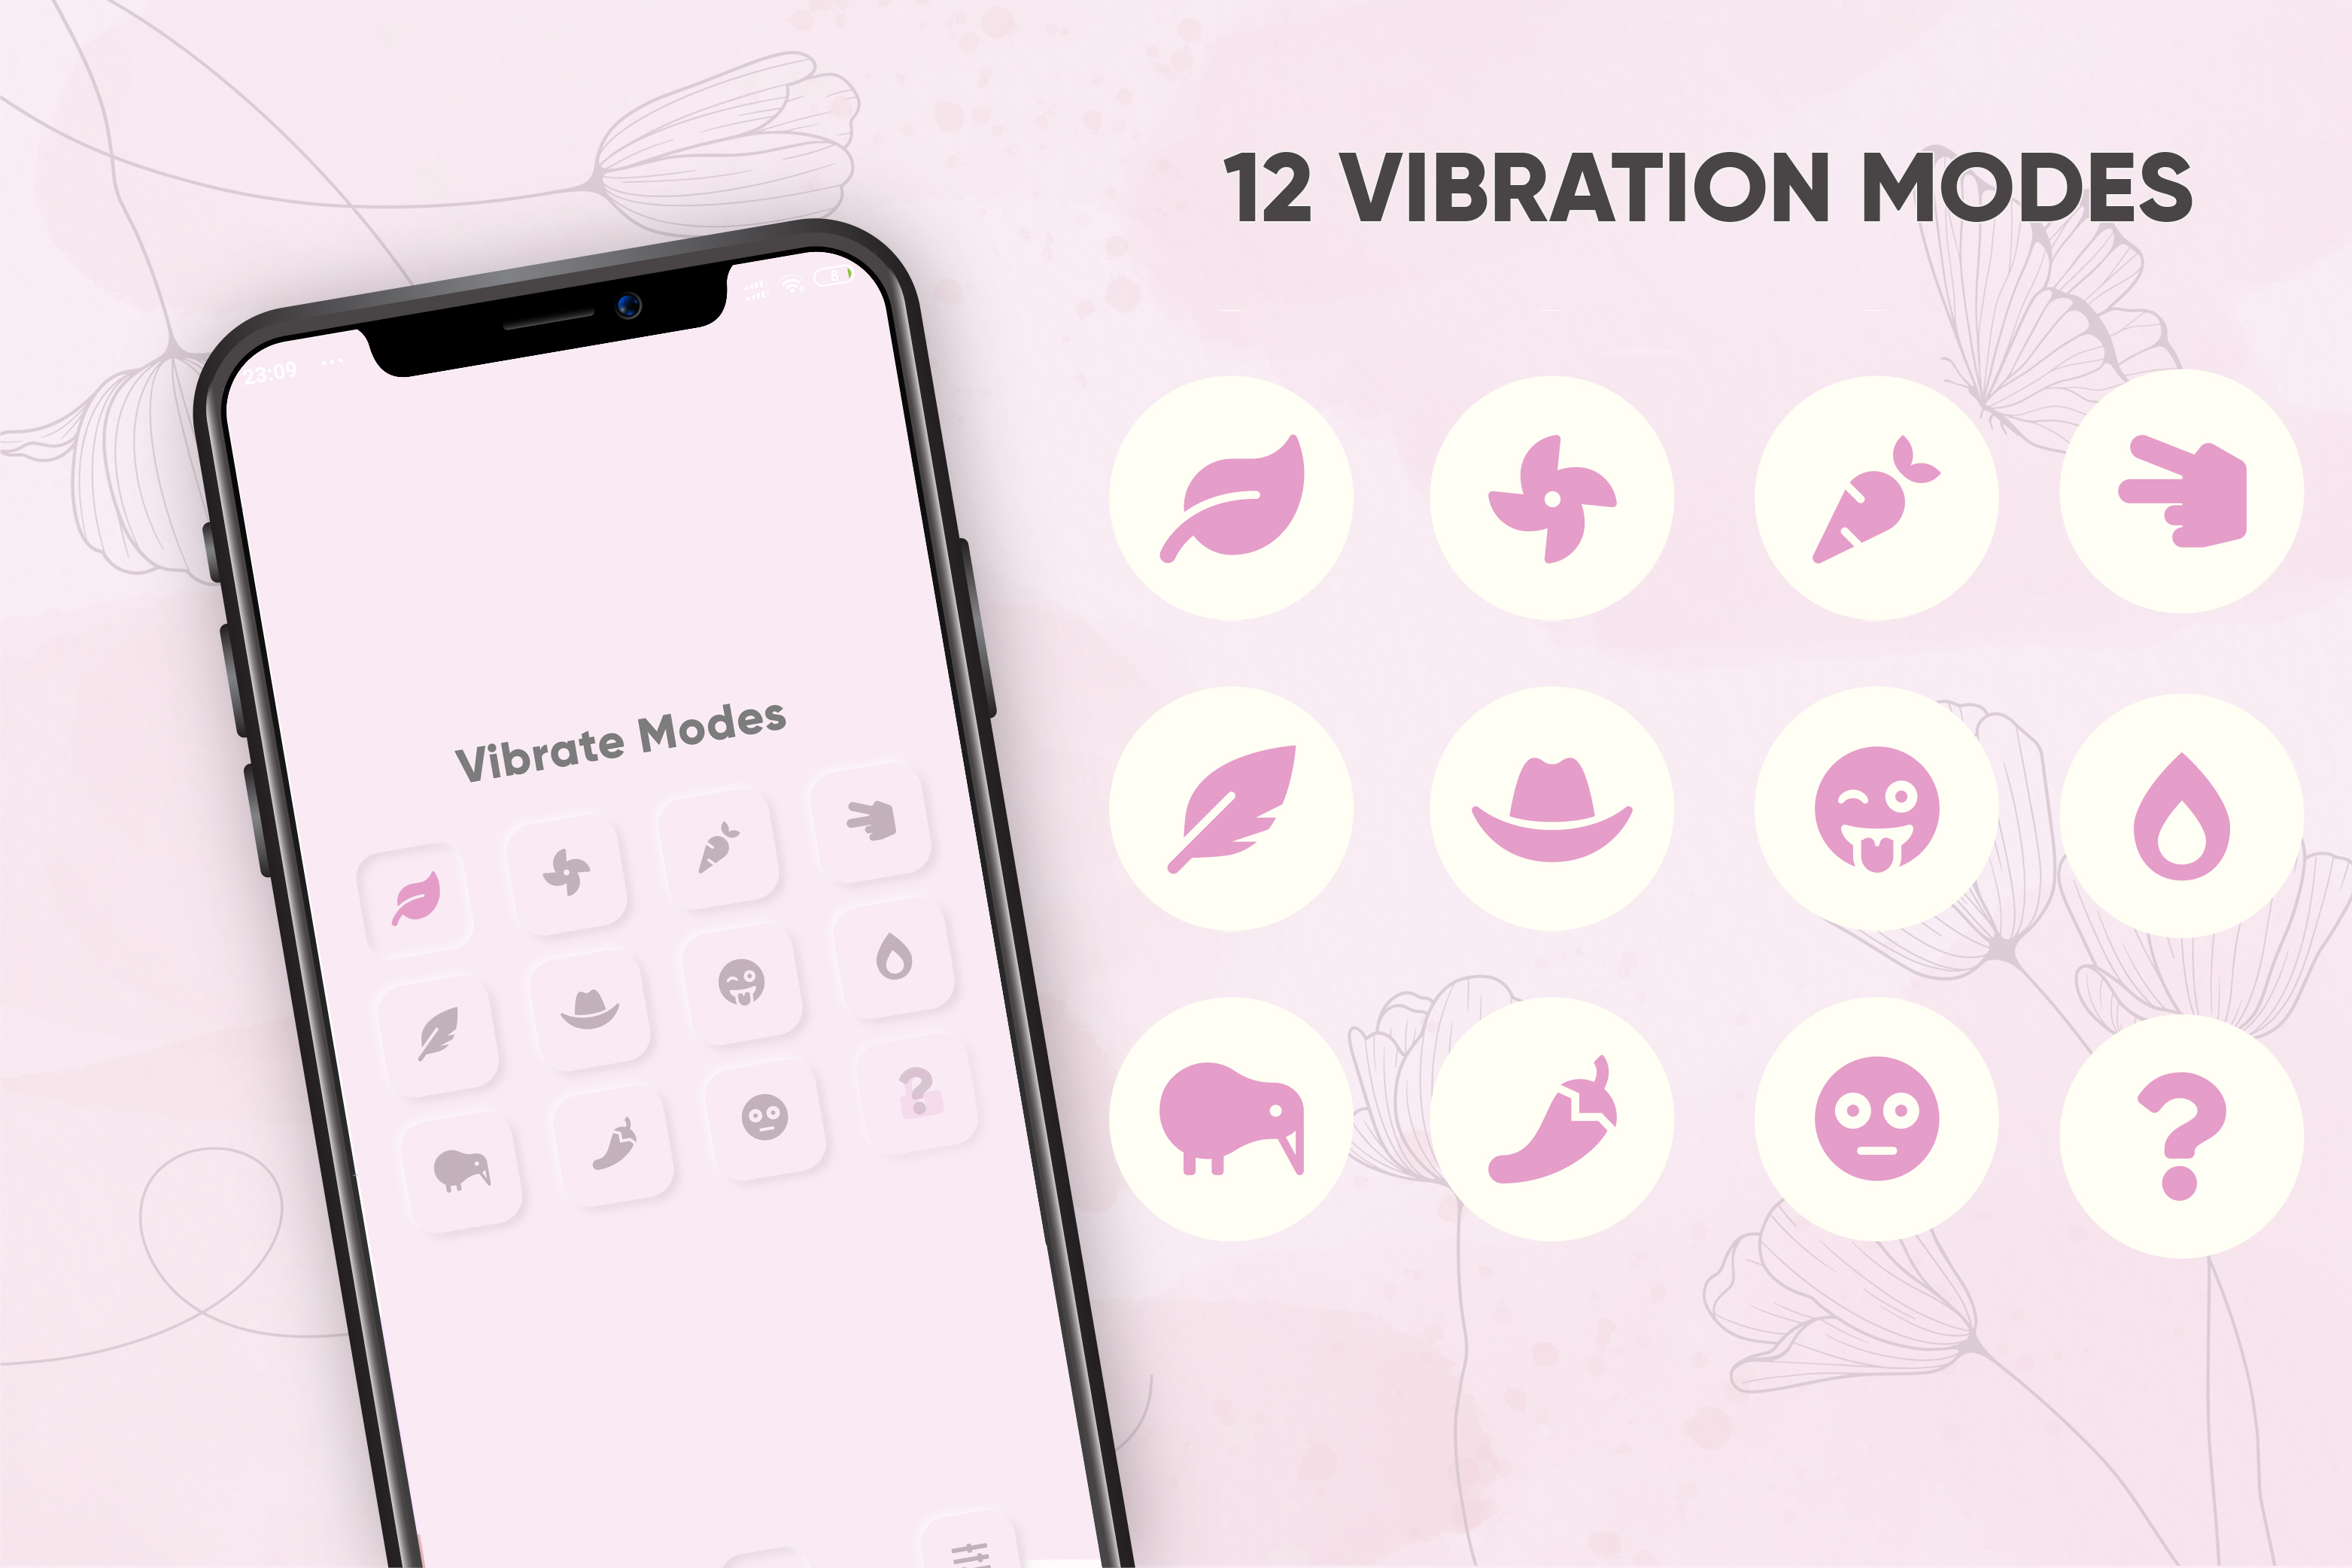 Vibrator - Body Massager